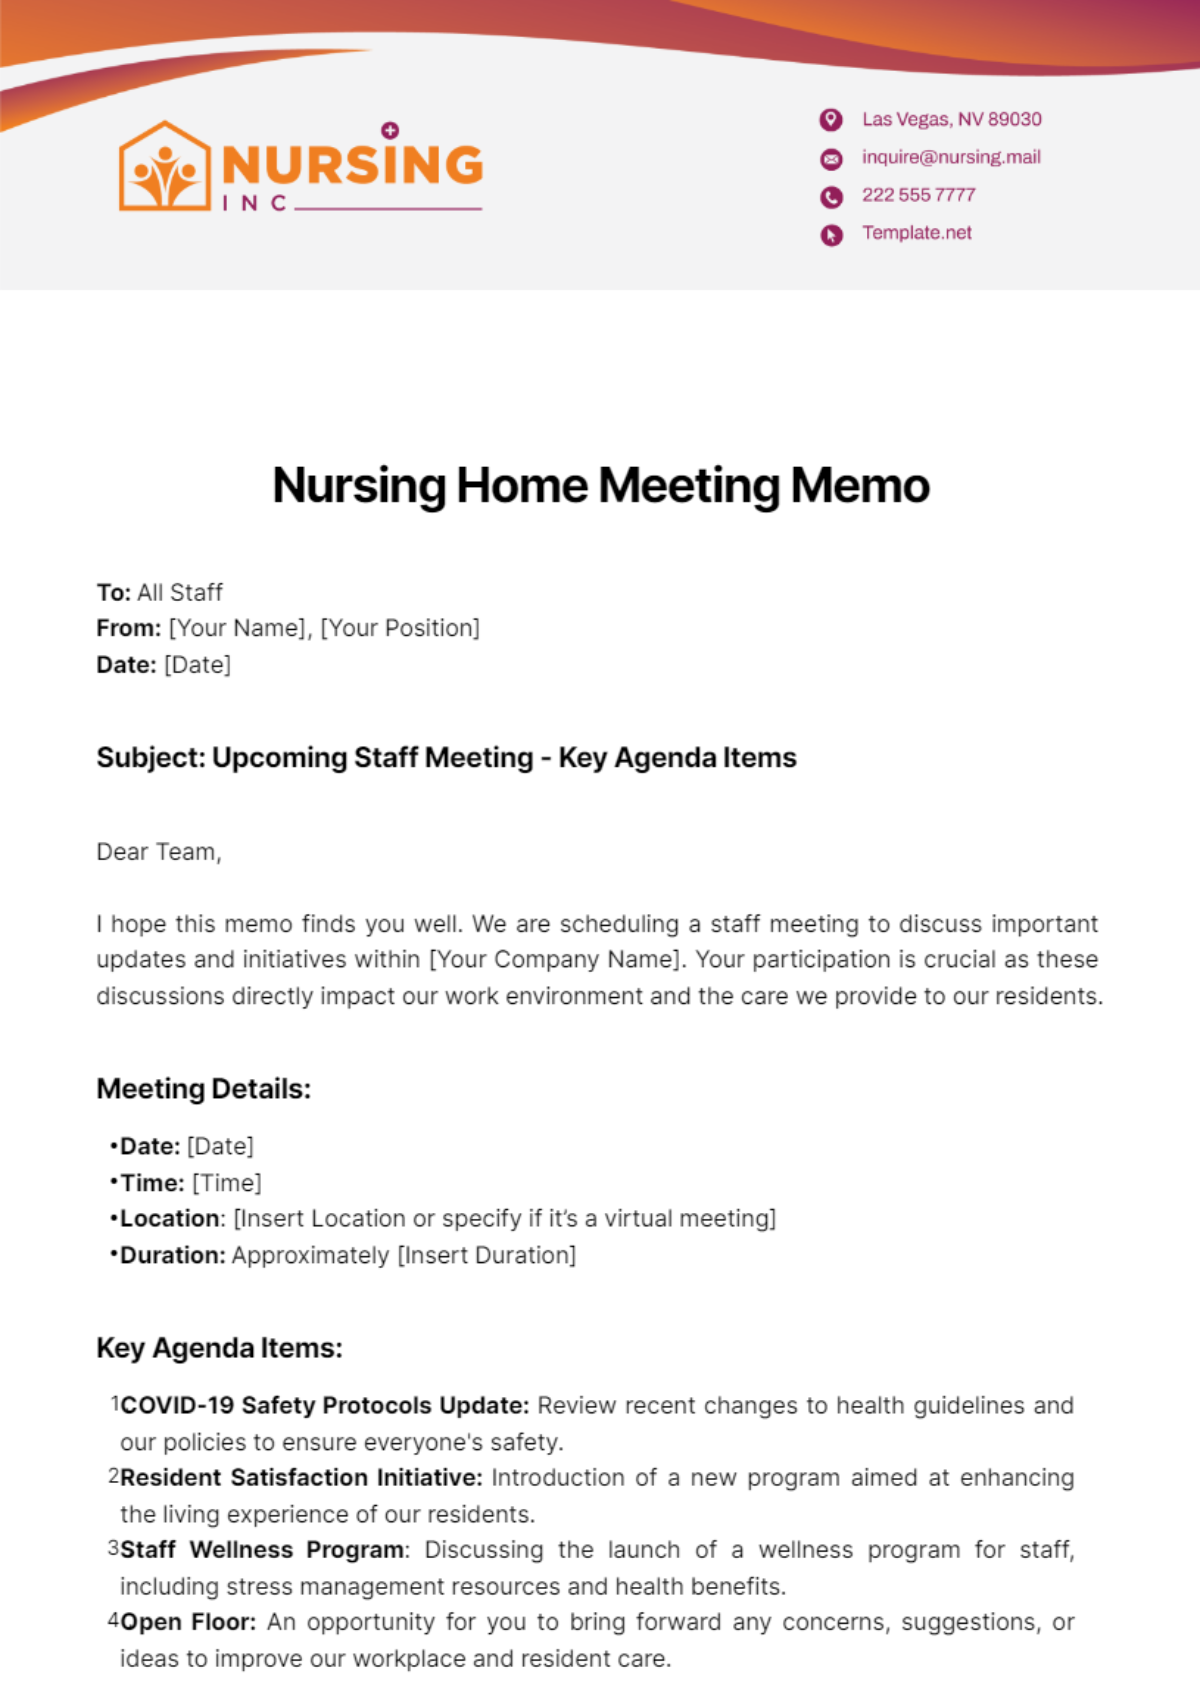 Nursing Home Meeting Memo Template